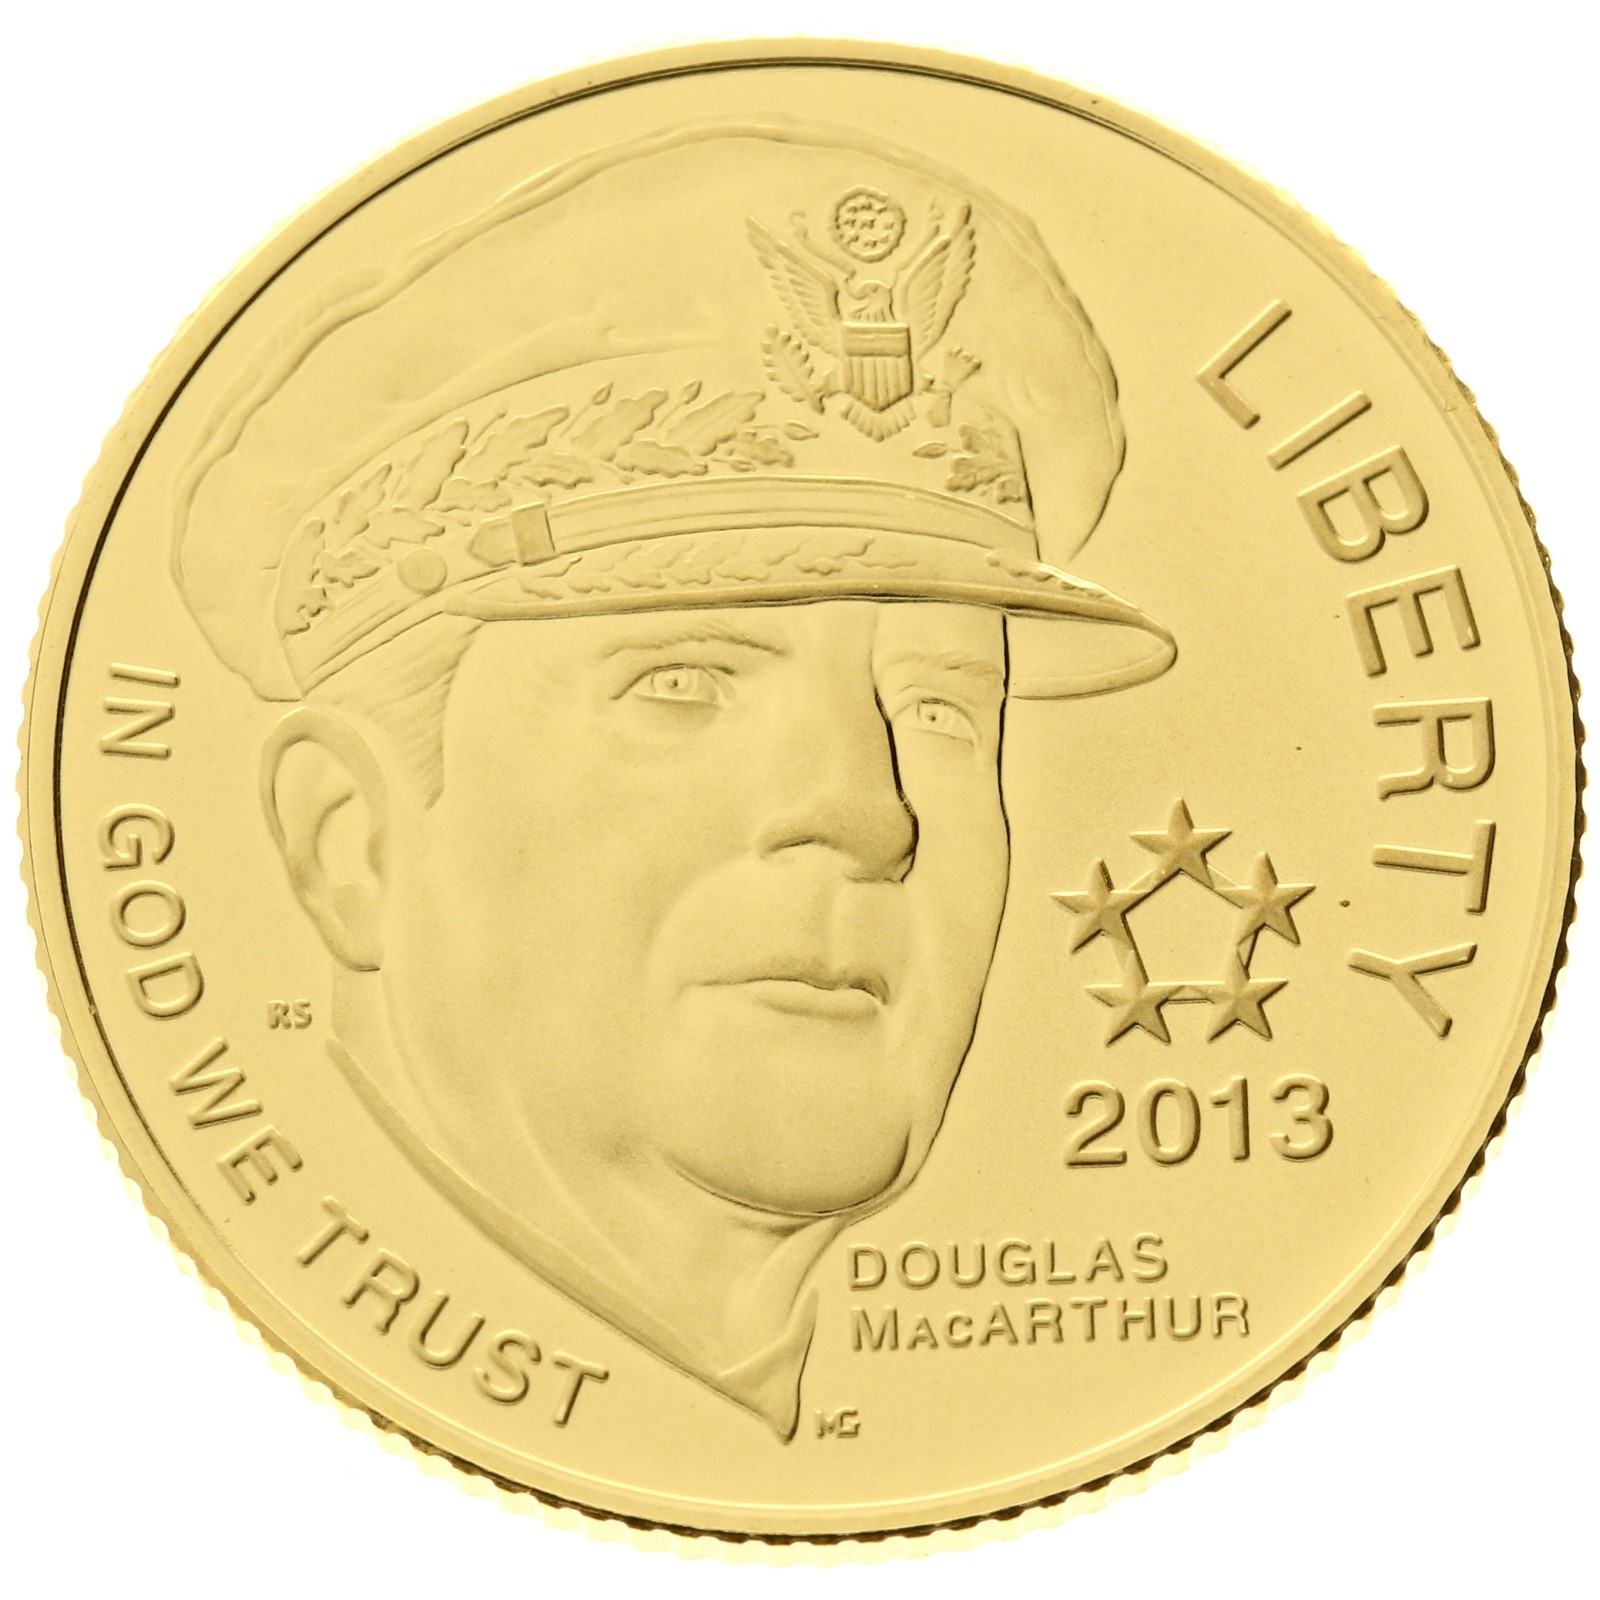 USA - 5 Dollars - 2013 - 5 Star Generals